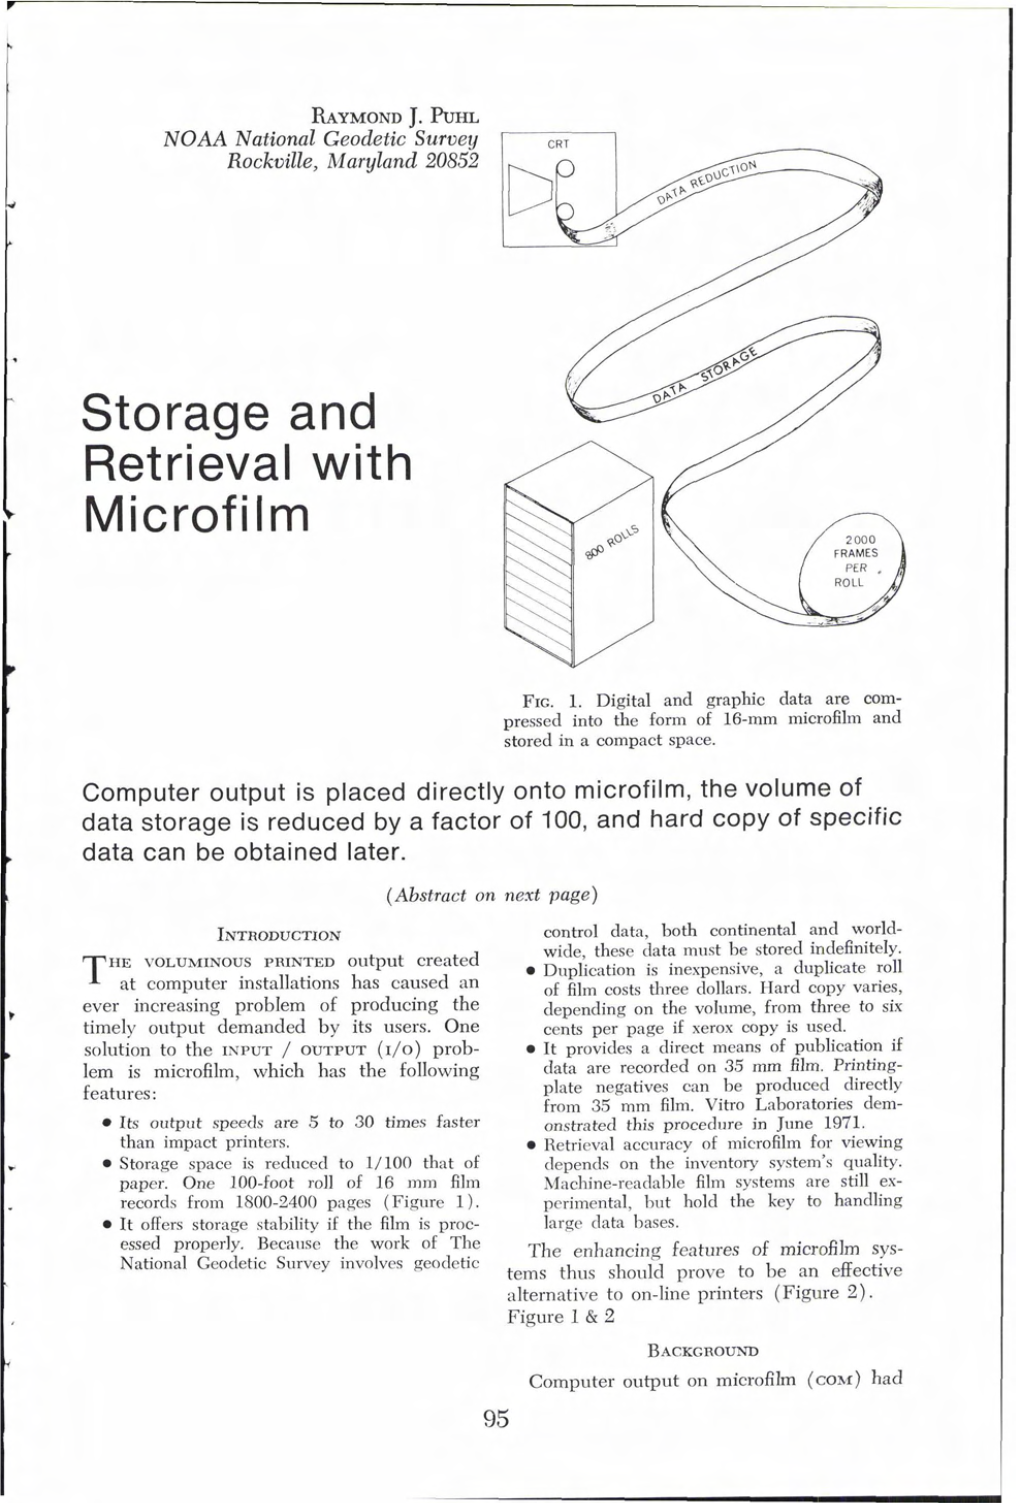 Storage and Retrieval with Microfilm